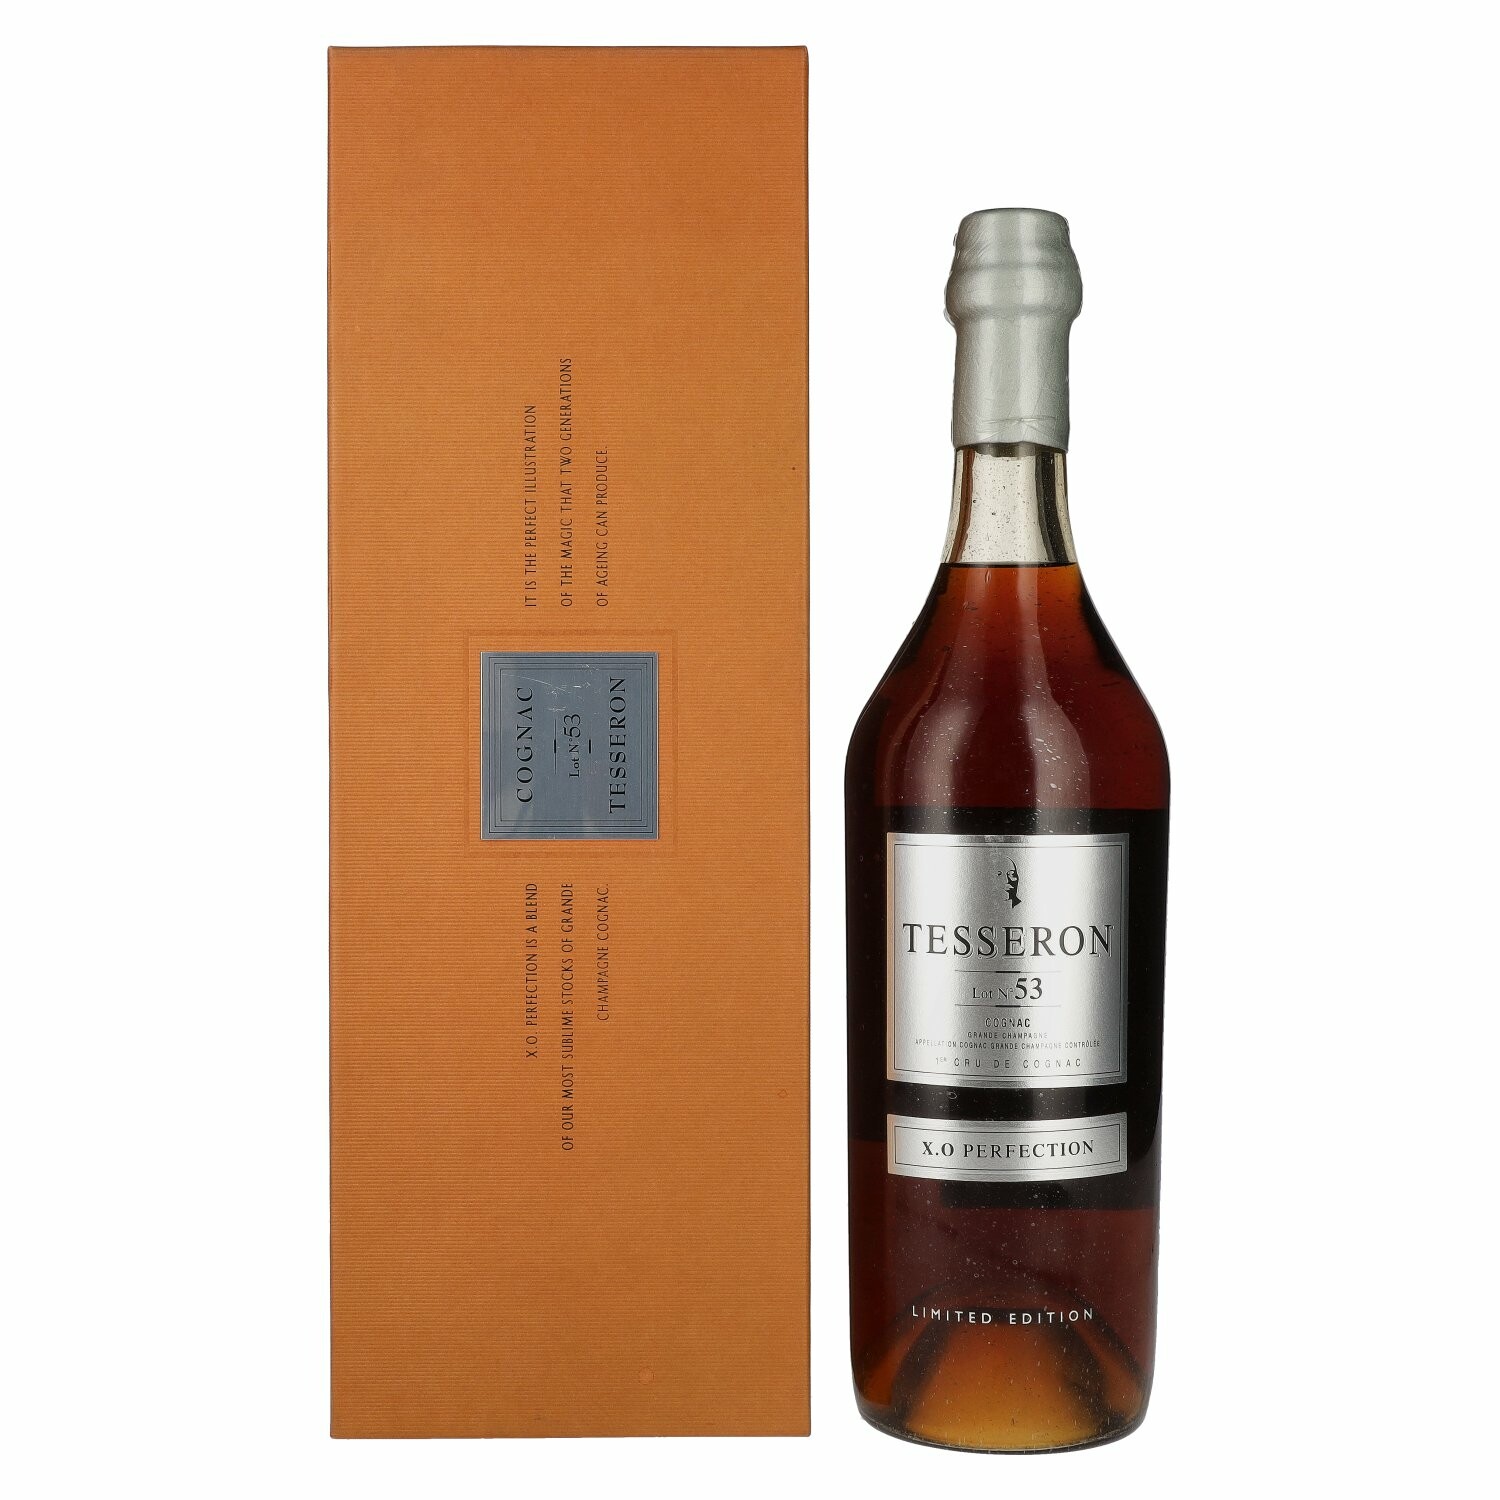 Tesseron Cognac X.O PERFECTION LOT N° 53 40% Vol. 1,75l in Giftbox